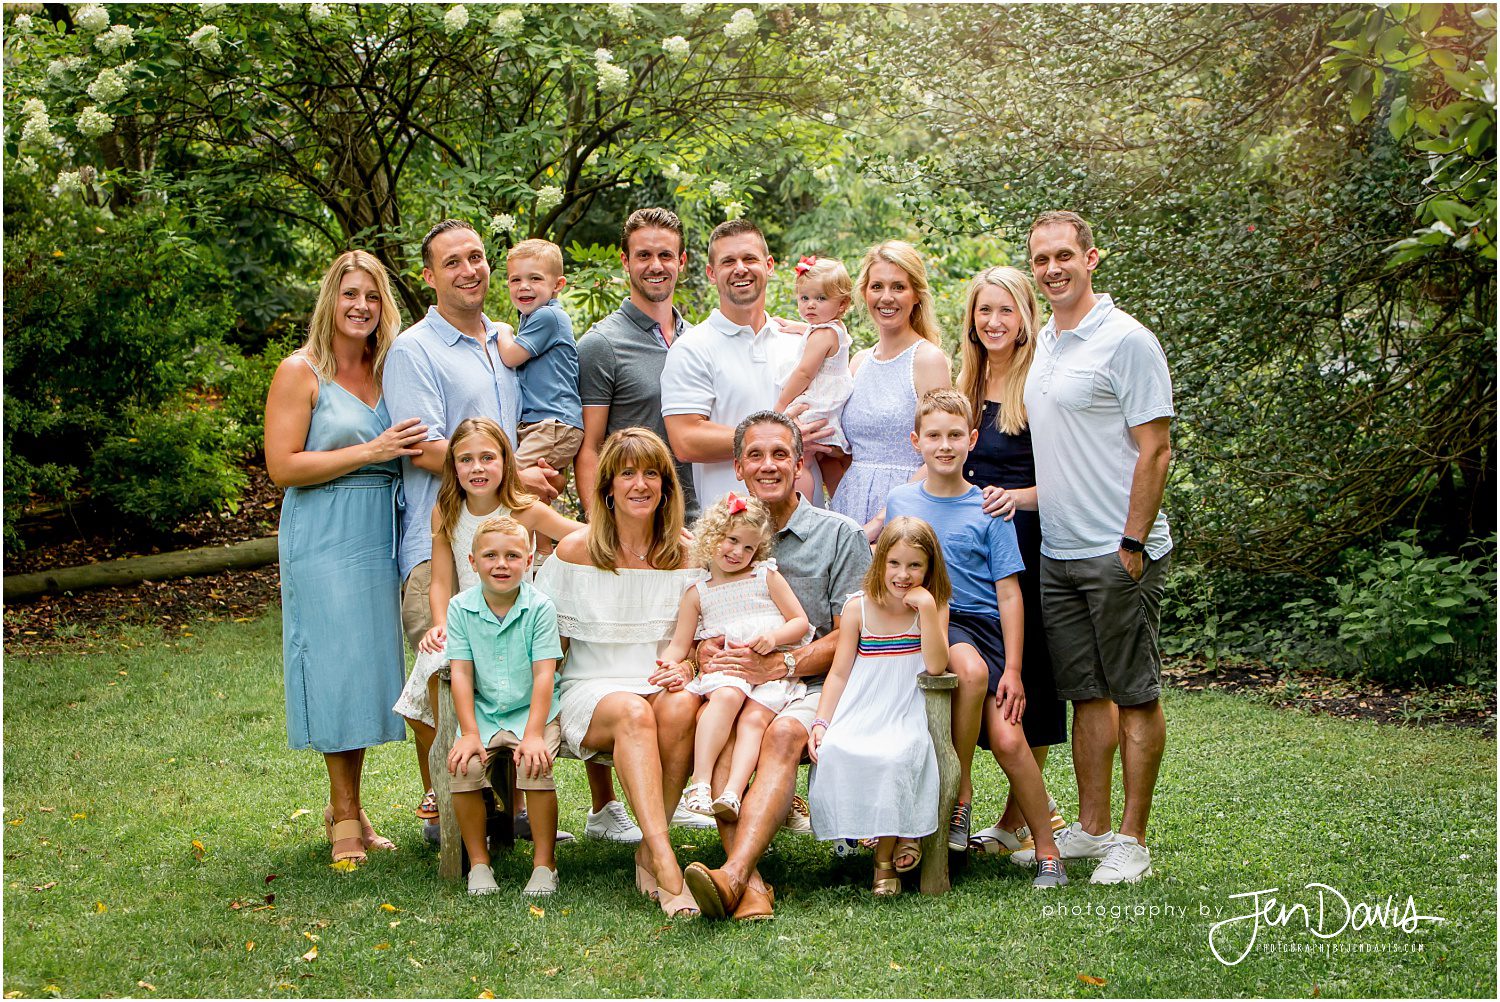 Best Large Extended Family Portrait New Jersey Family Photographer NJ